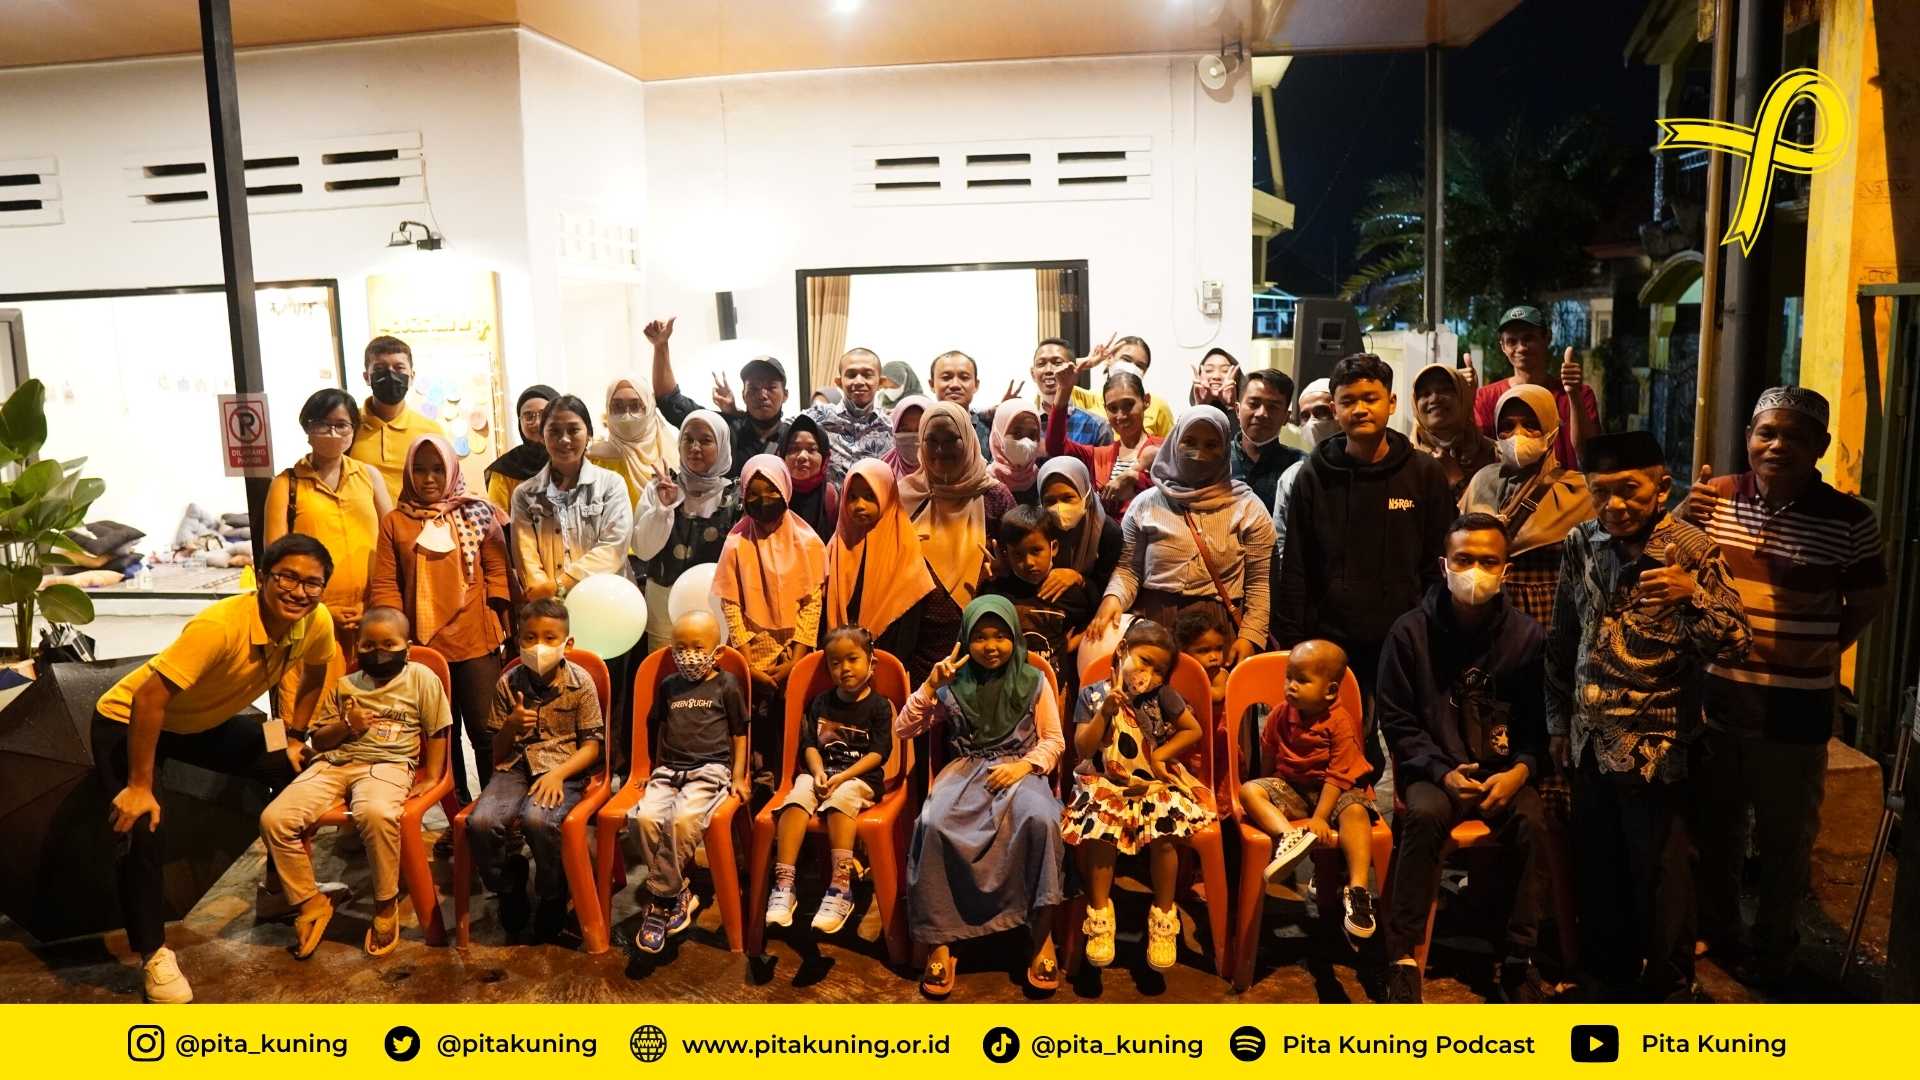 Sosialisasi Pelayanan Pita Kuning Yogyakarta dan Syukuran RPK Yogyakarta (3)